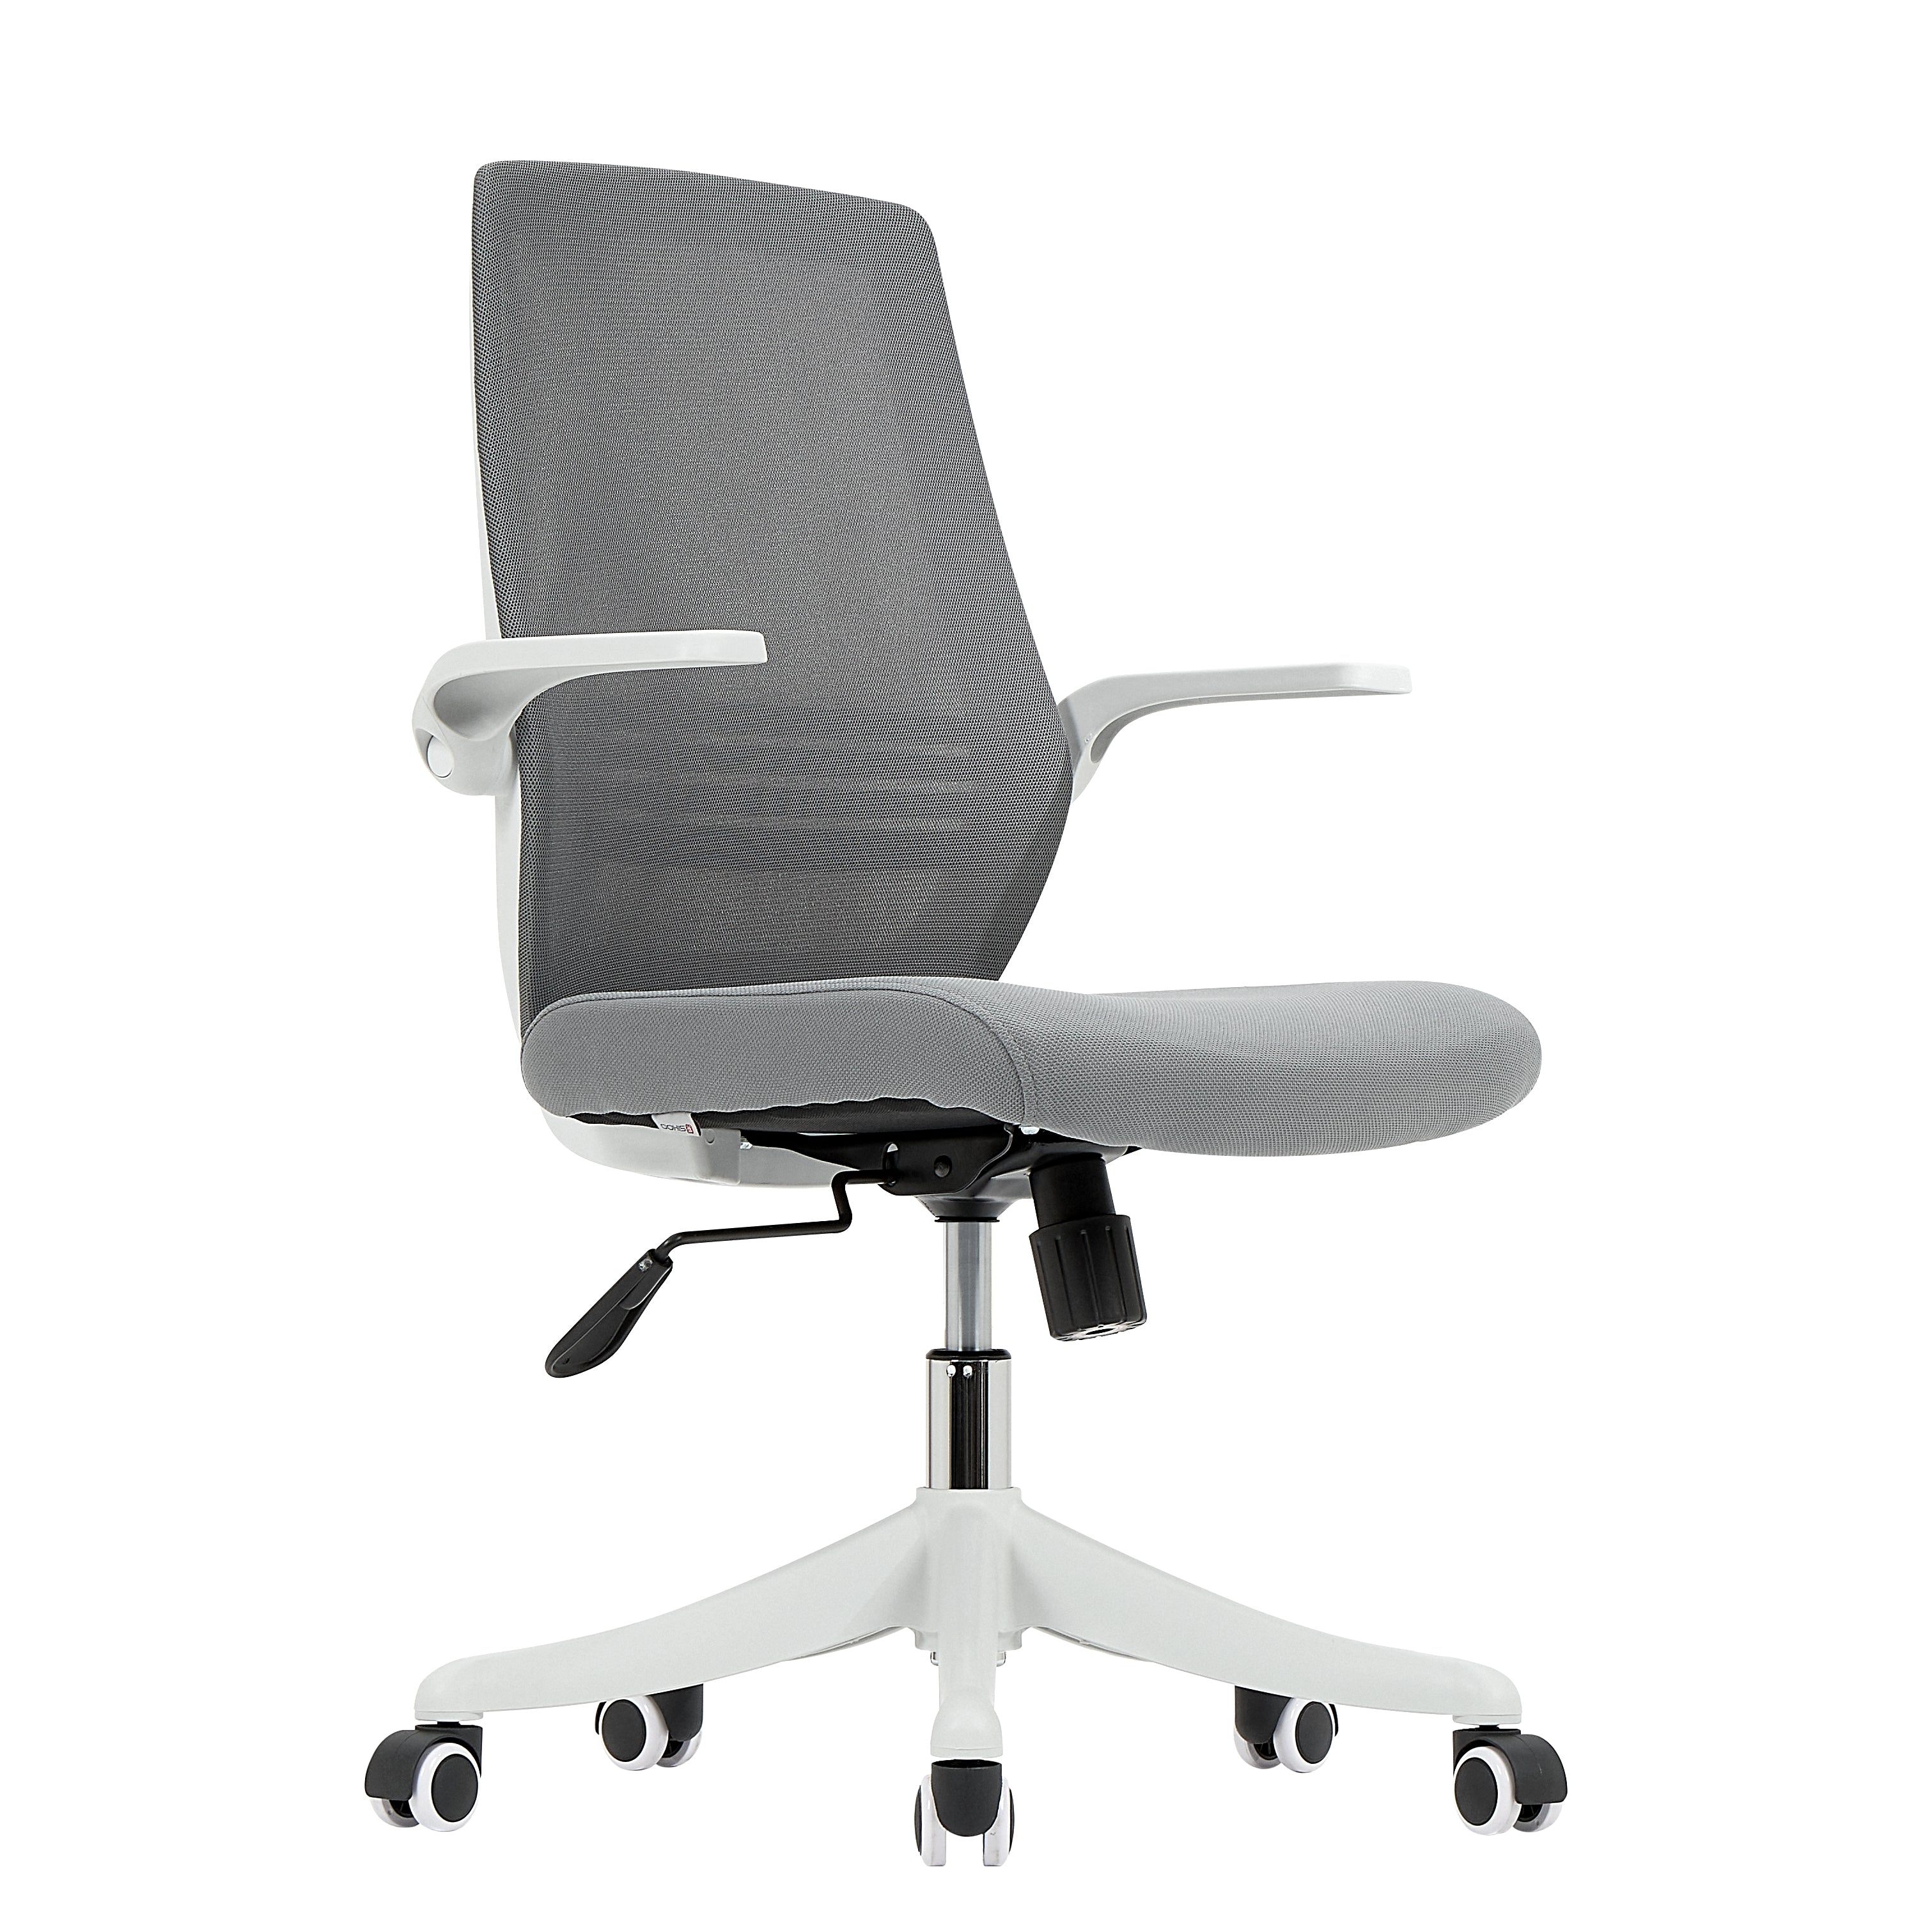 M76 Ergonomic office chair